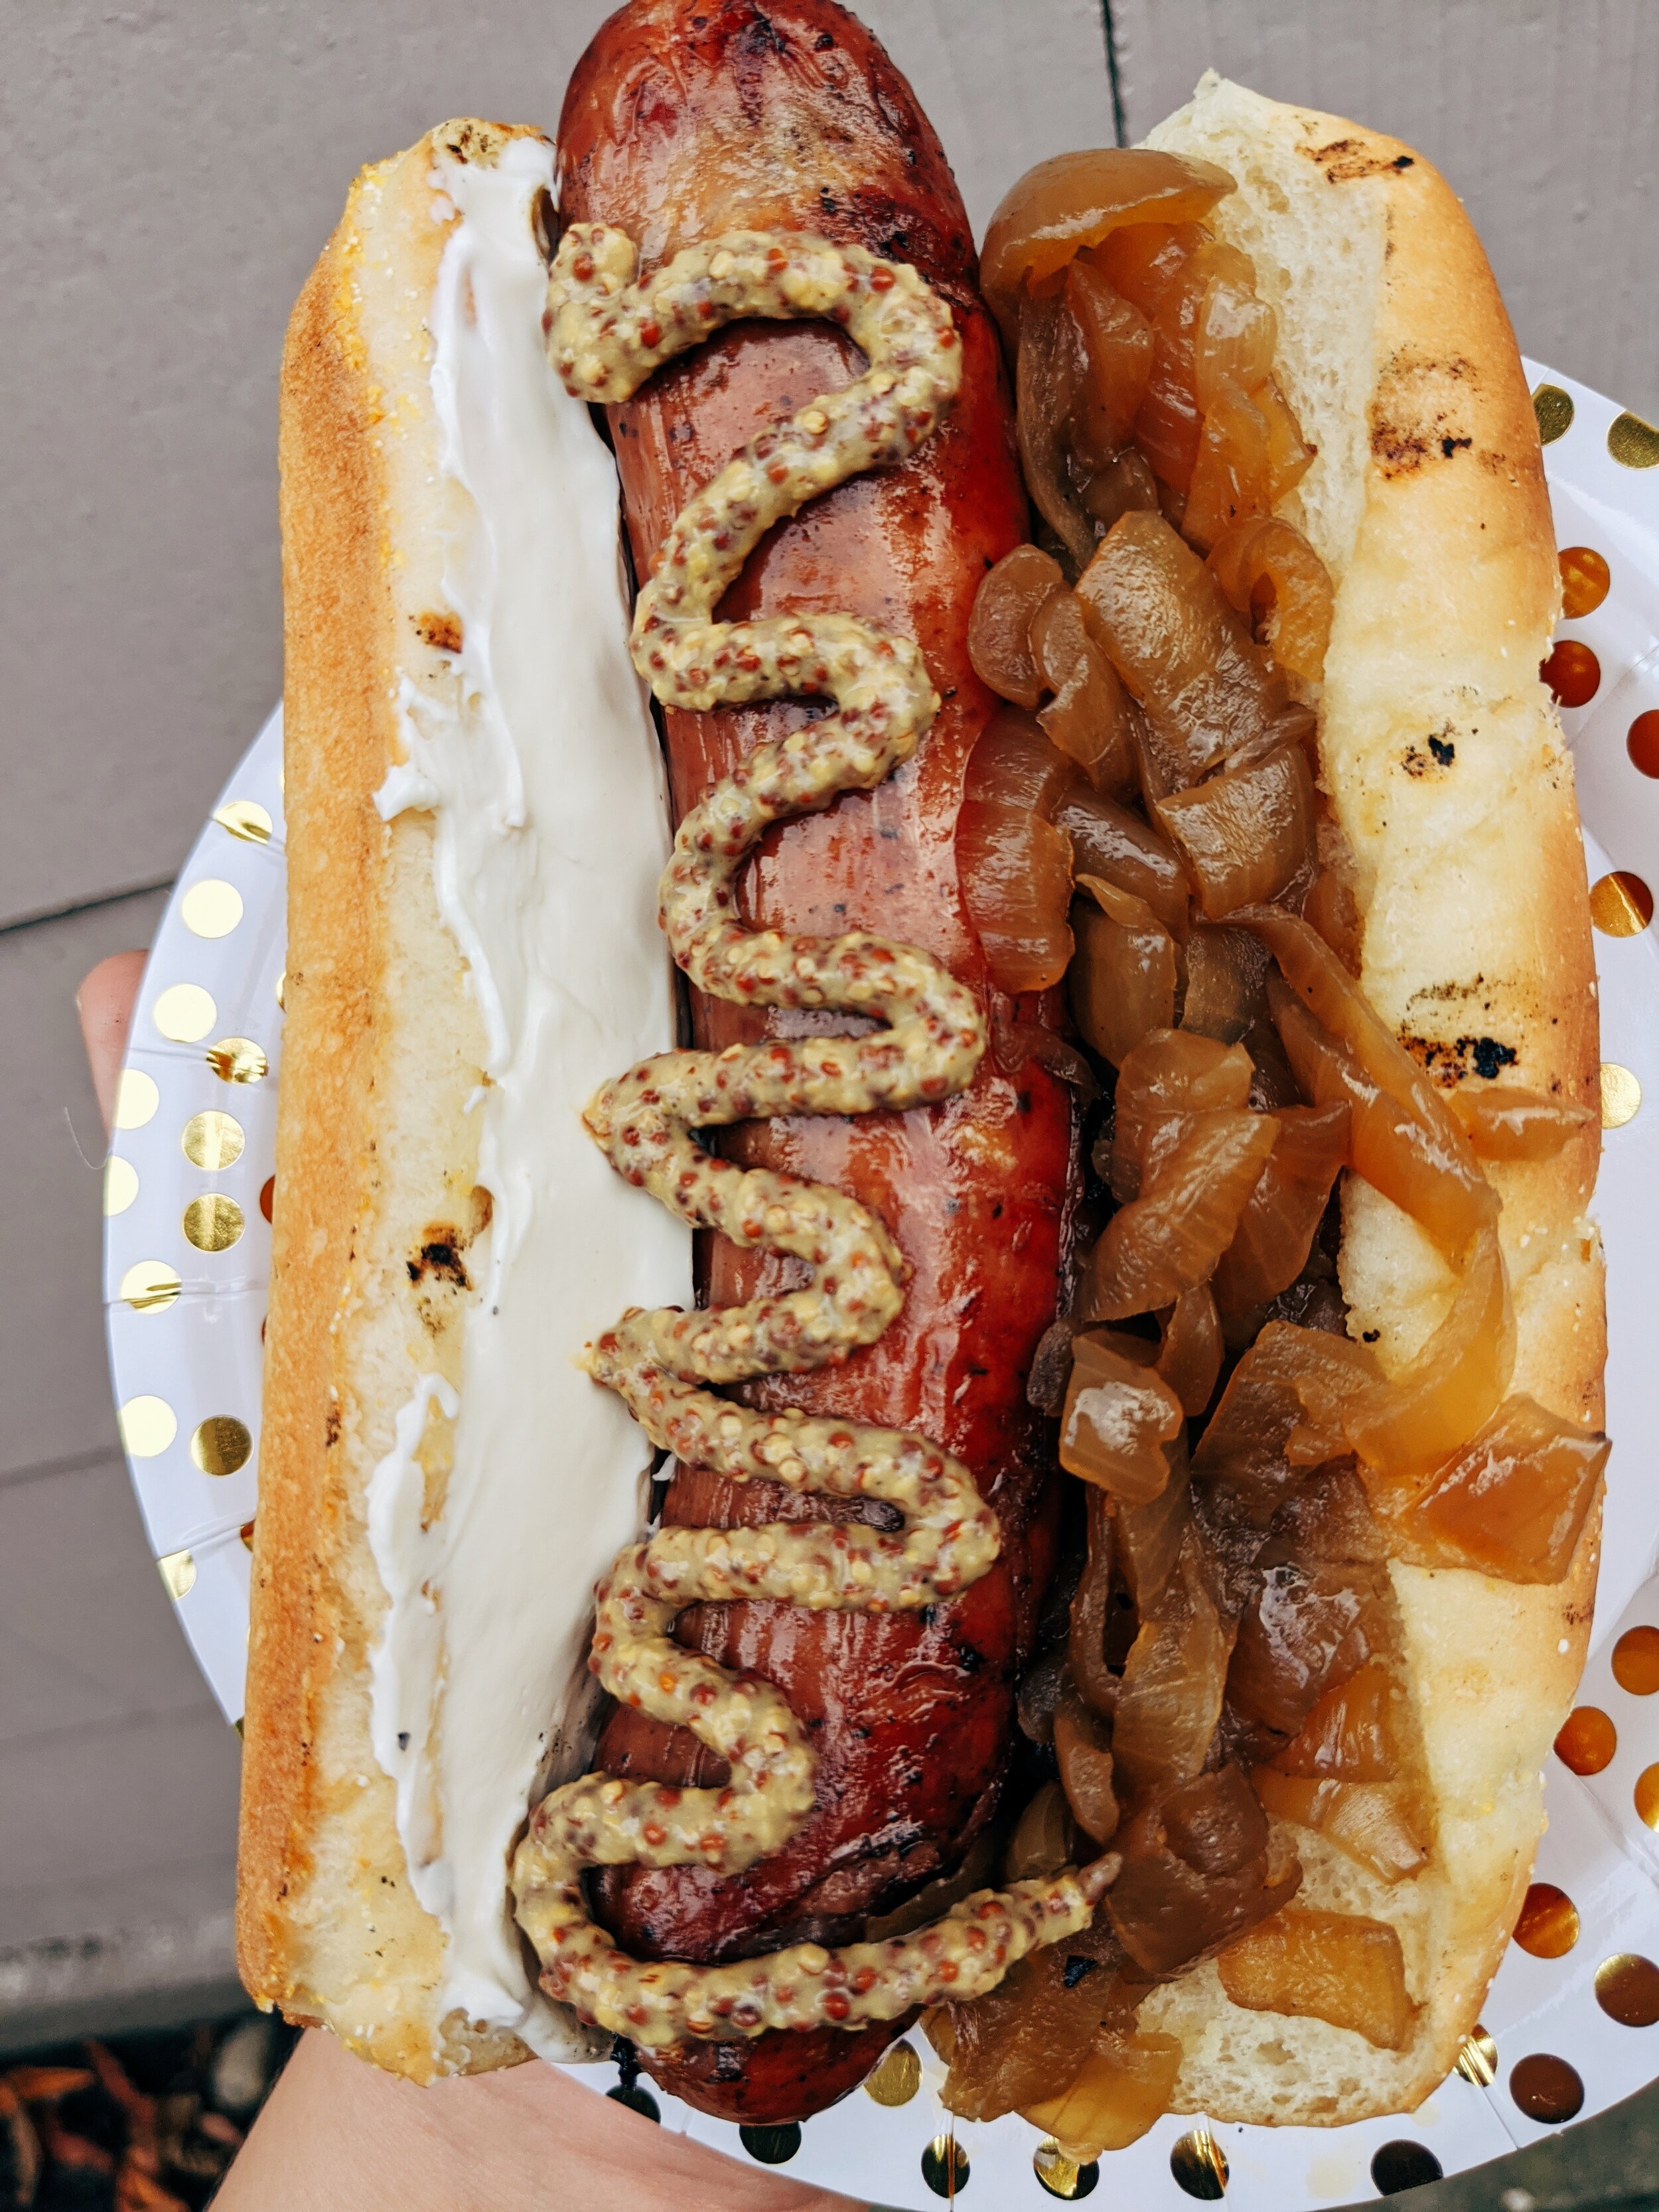 Hot Dogs com cebola caramelizada [Hot Dogs with caramelized onions]